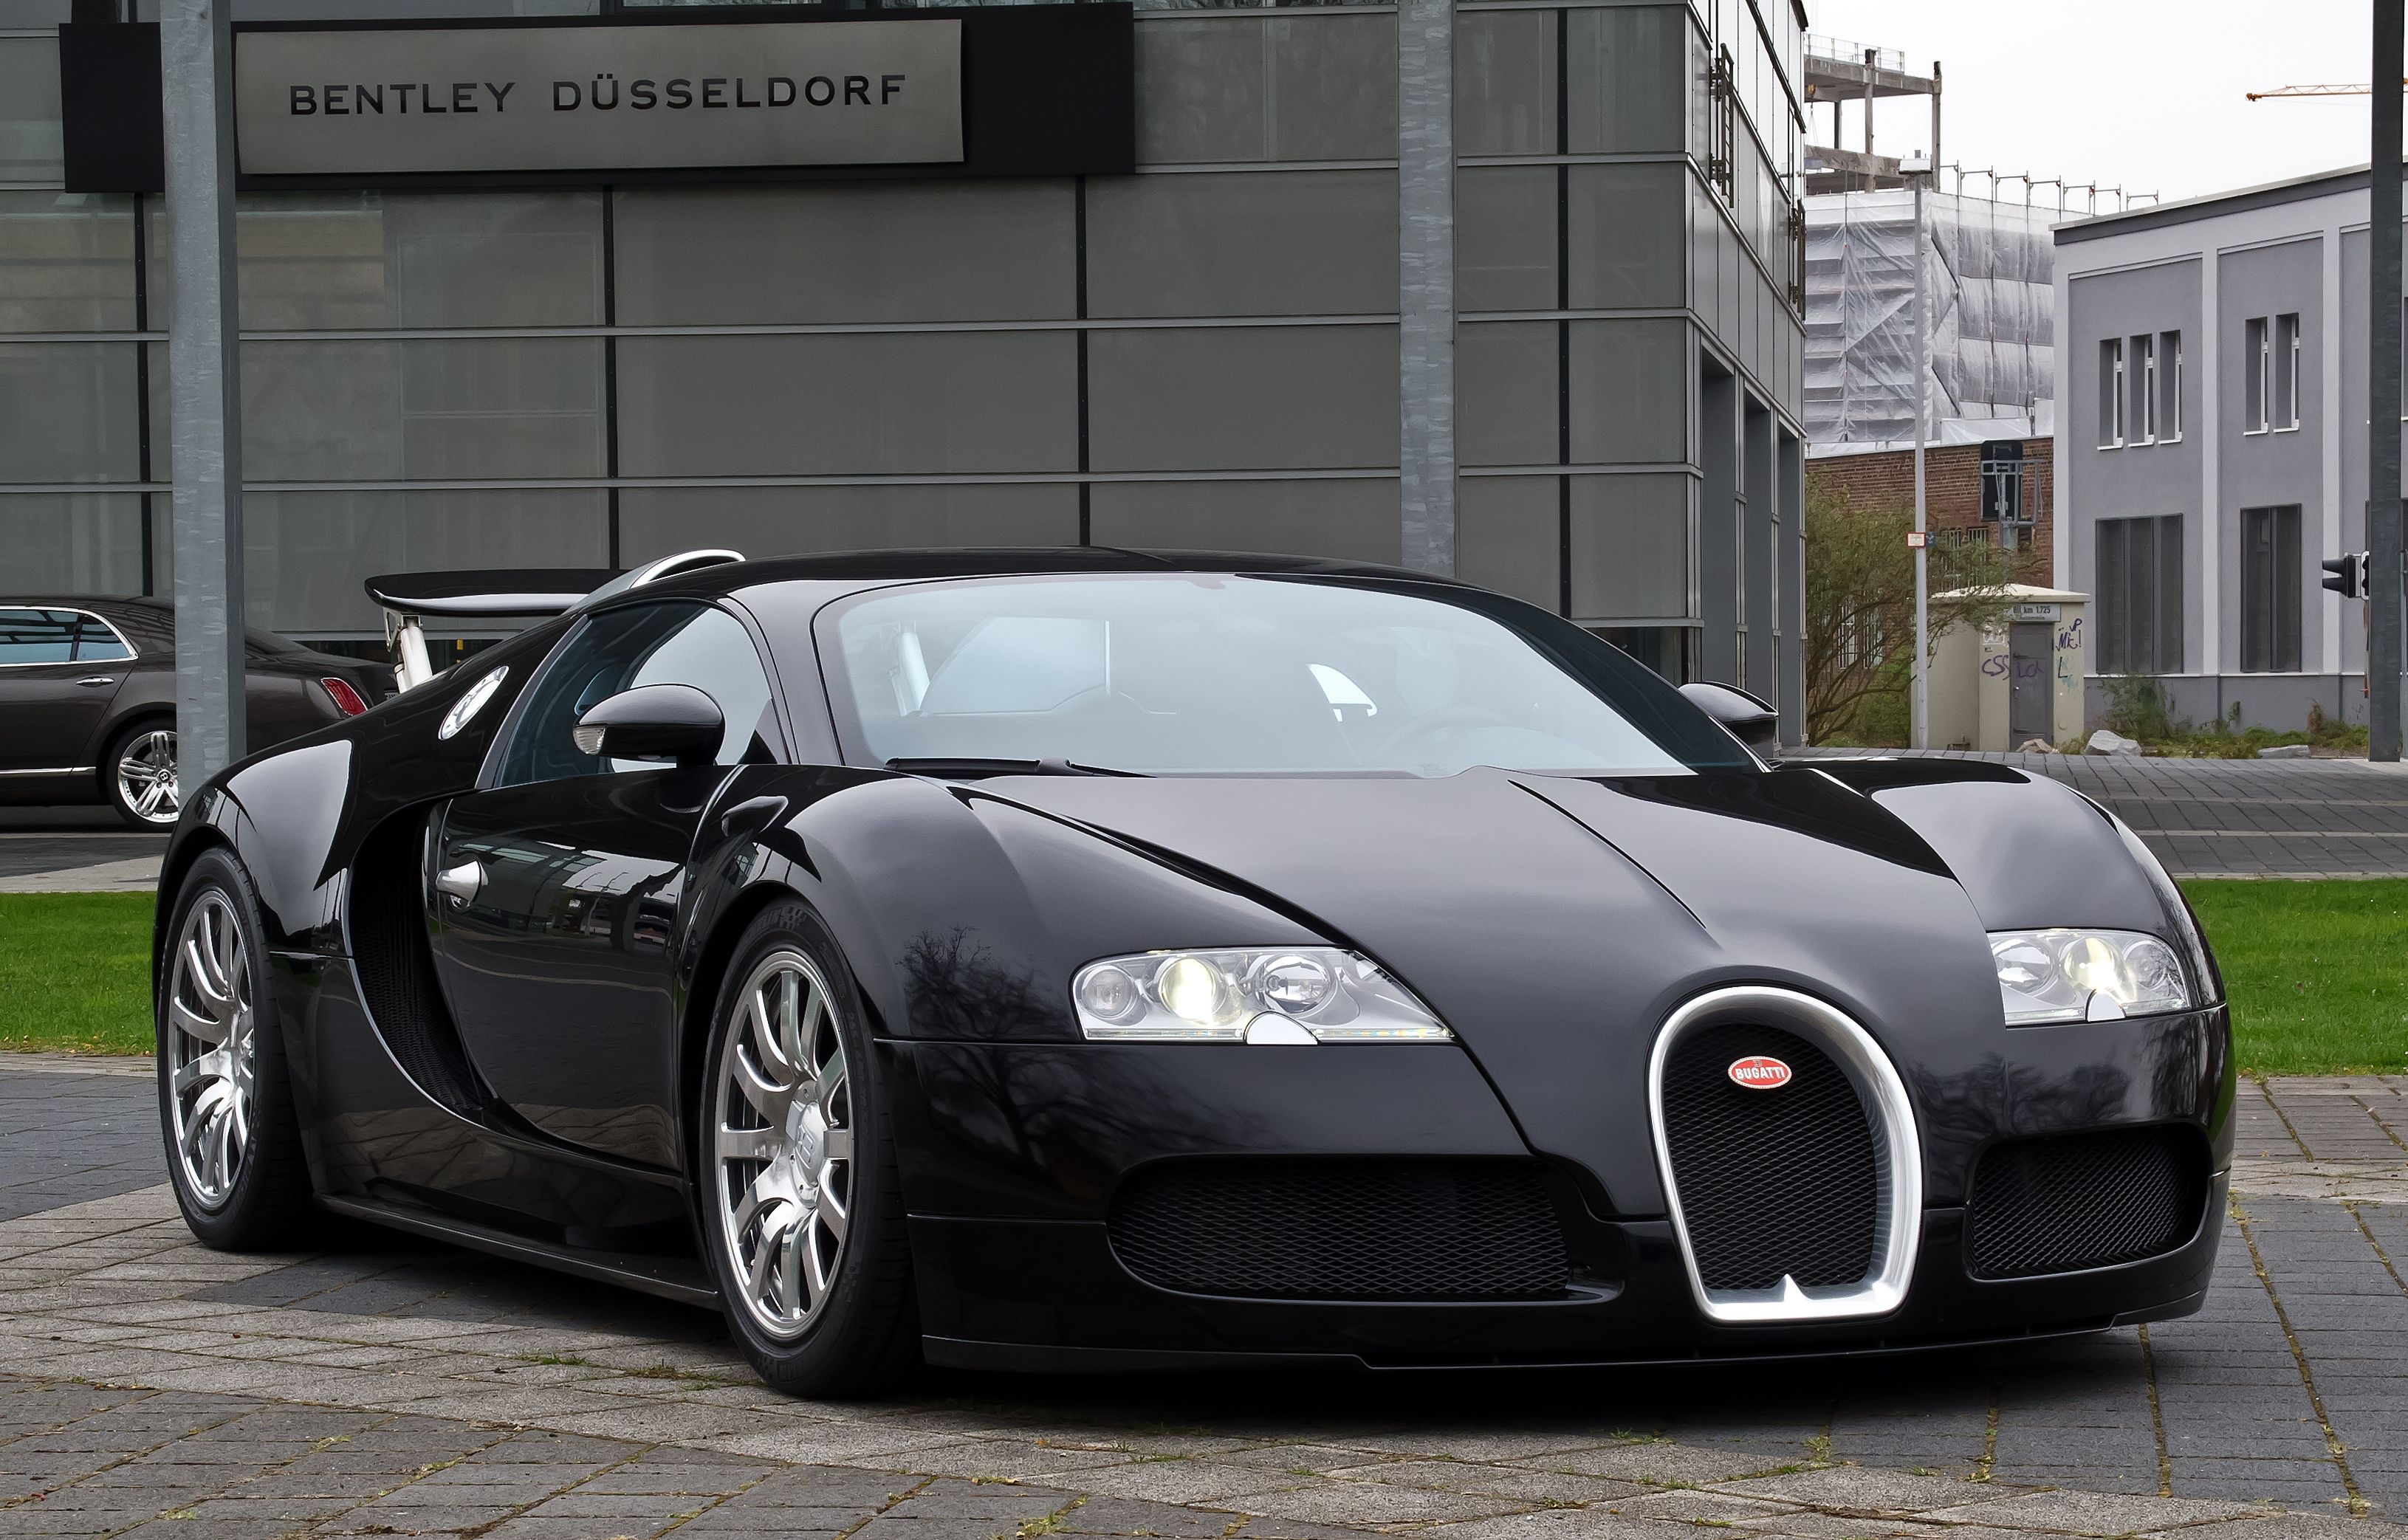 The Bugatti Veyron is an engineering marvel